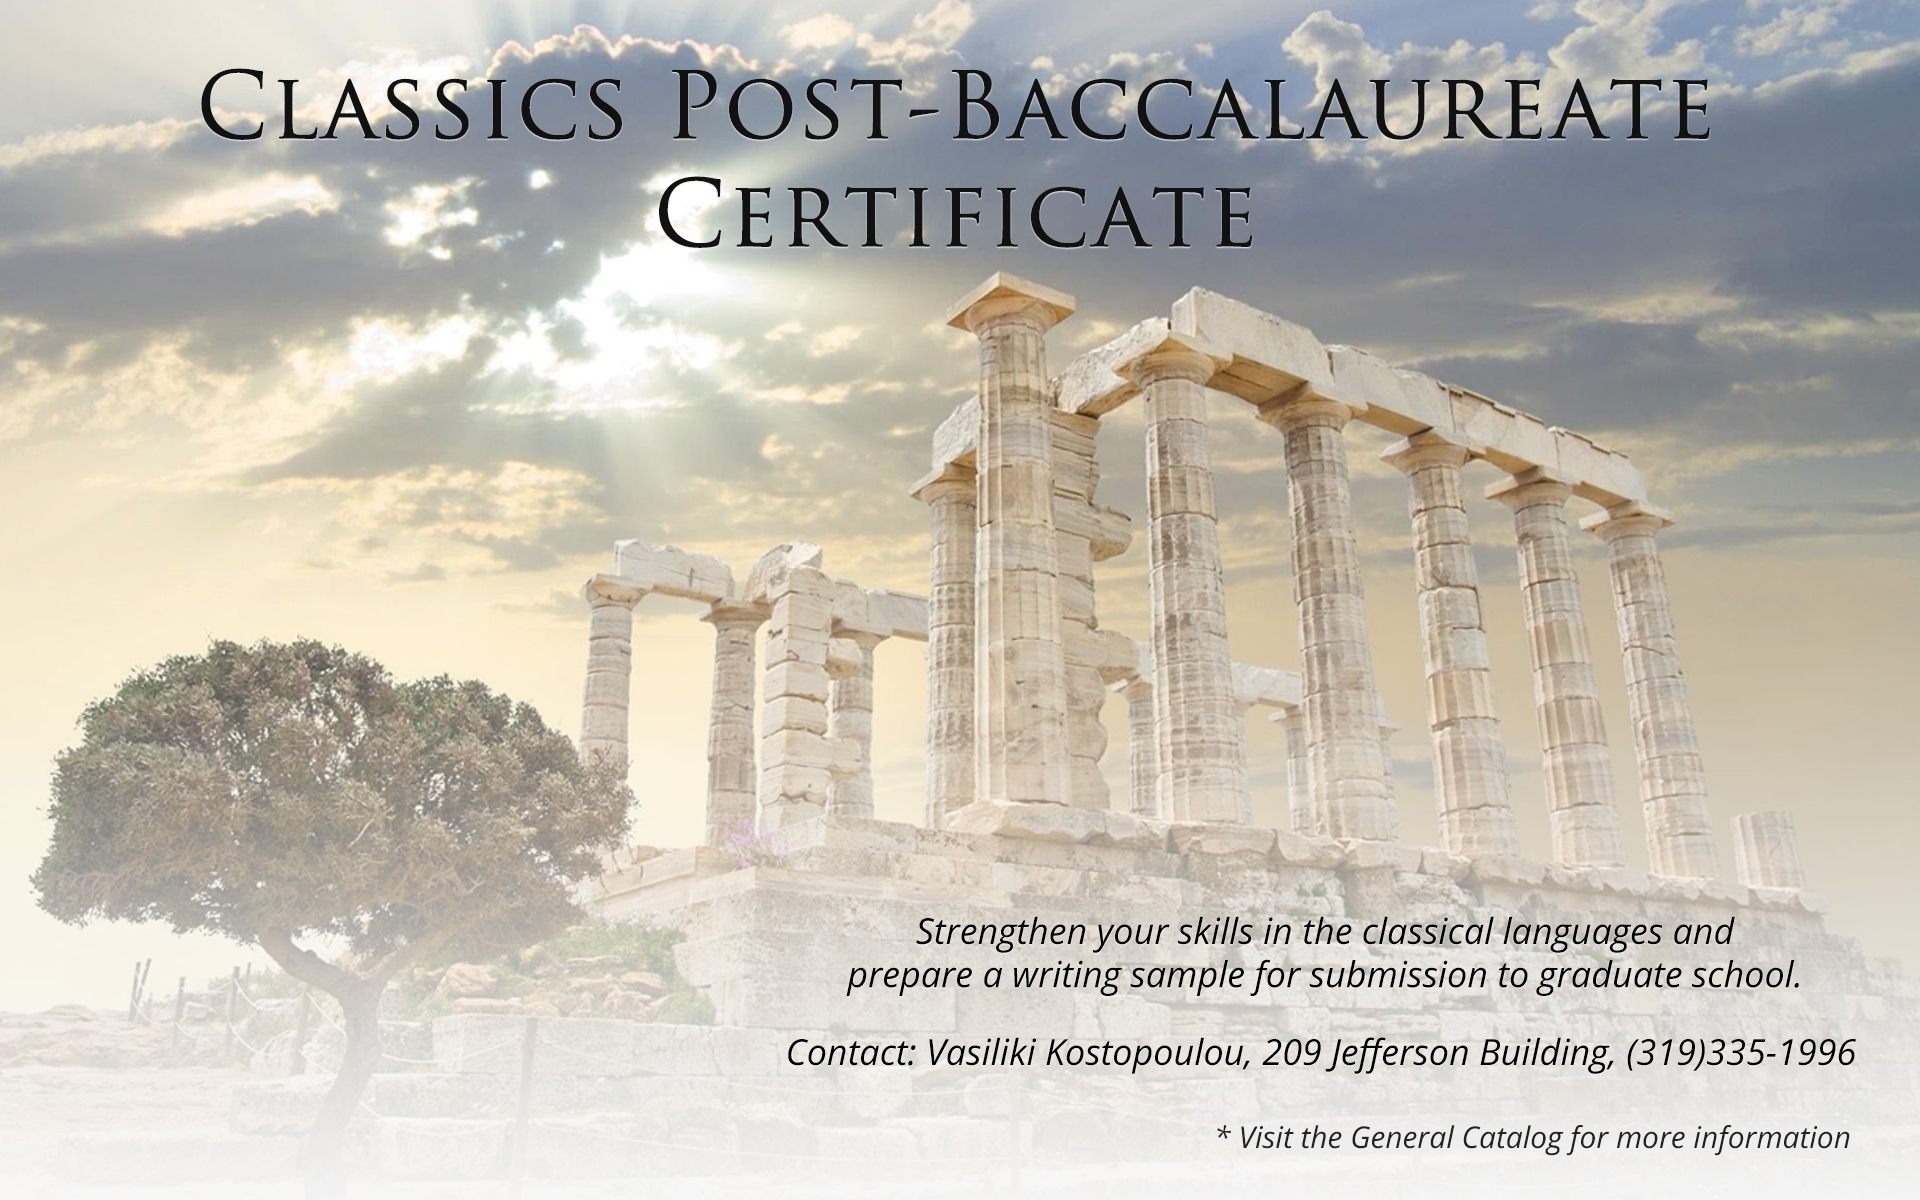 Classics Post-Baccalaureate Certificate